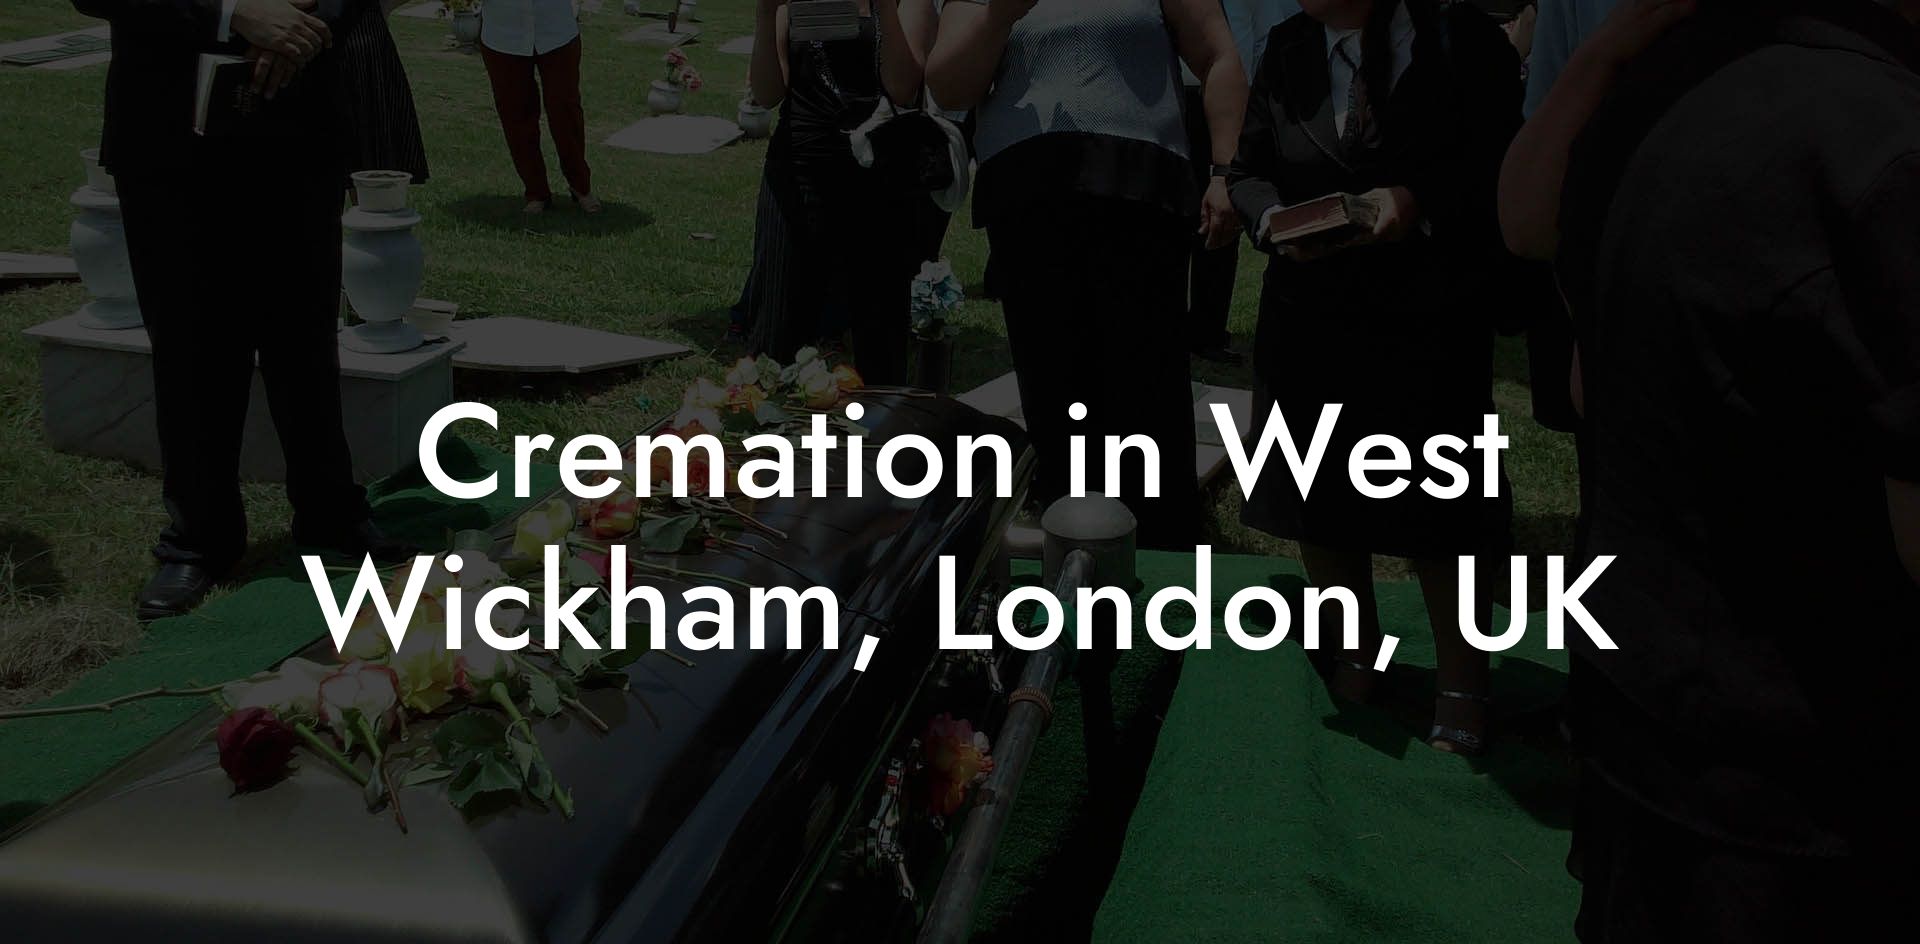 Cremation in West Wickham, London, UK